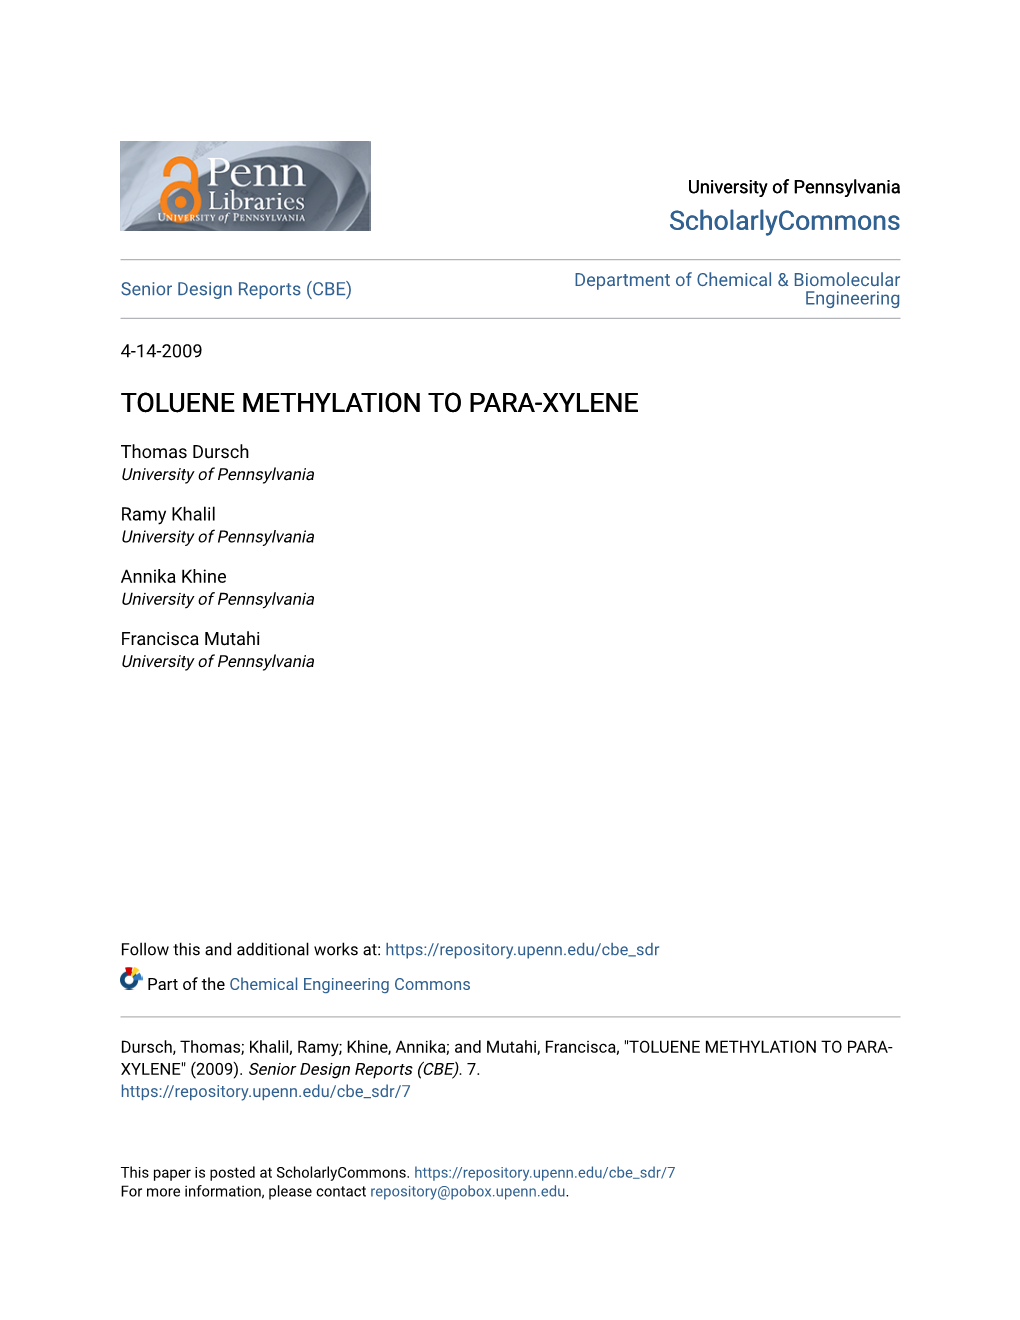 Toluene Methylation to Para-Xylene